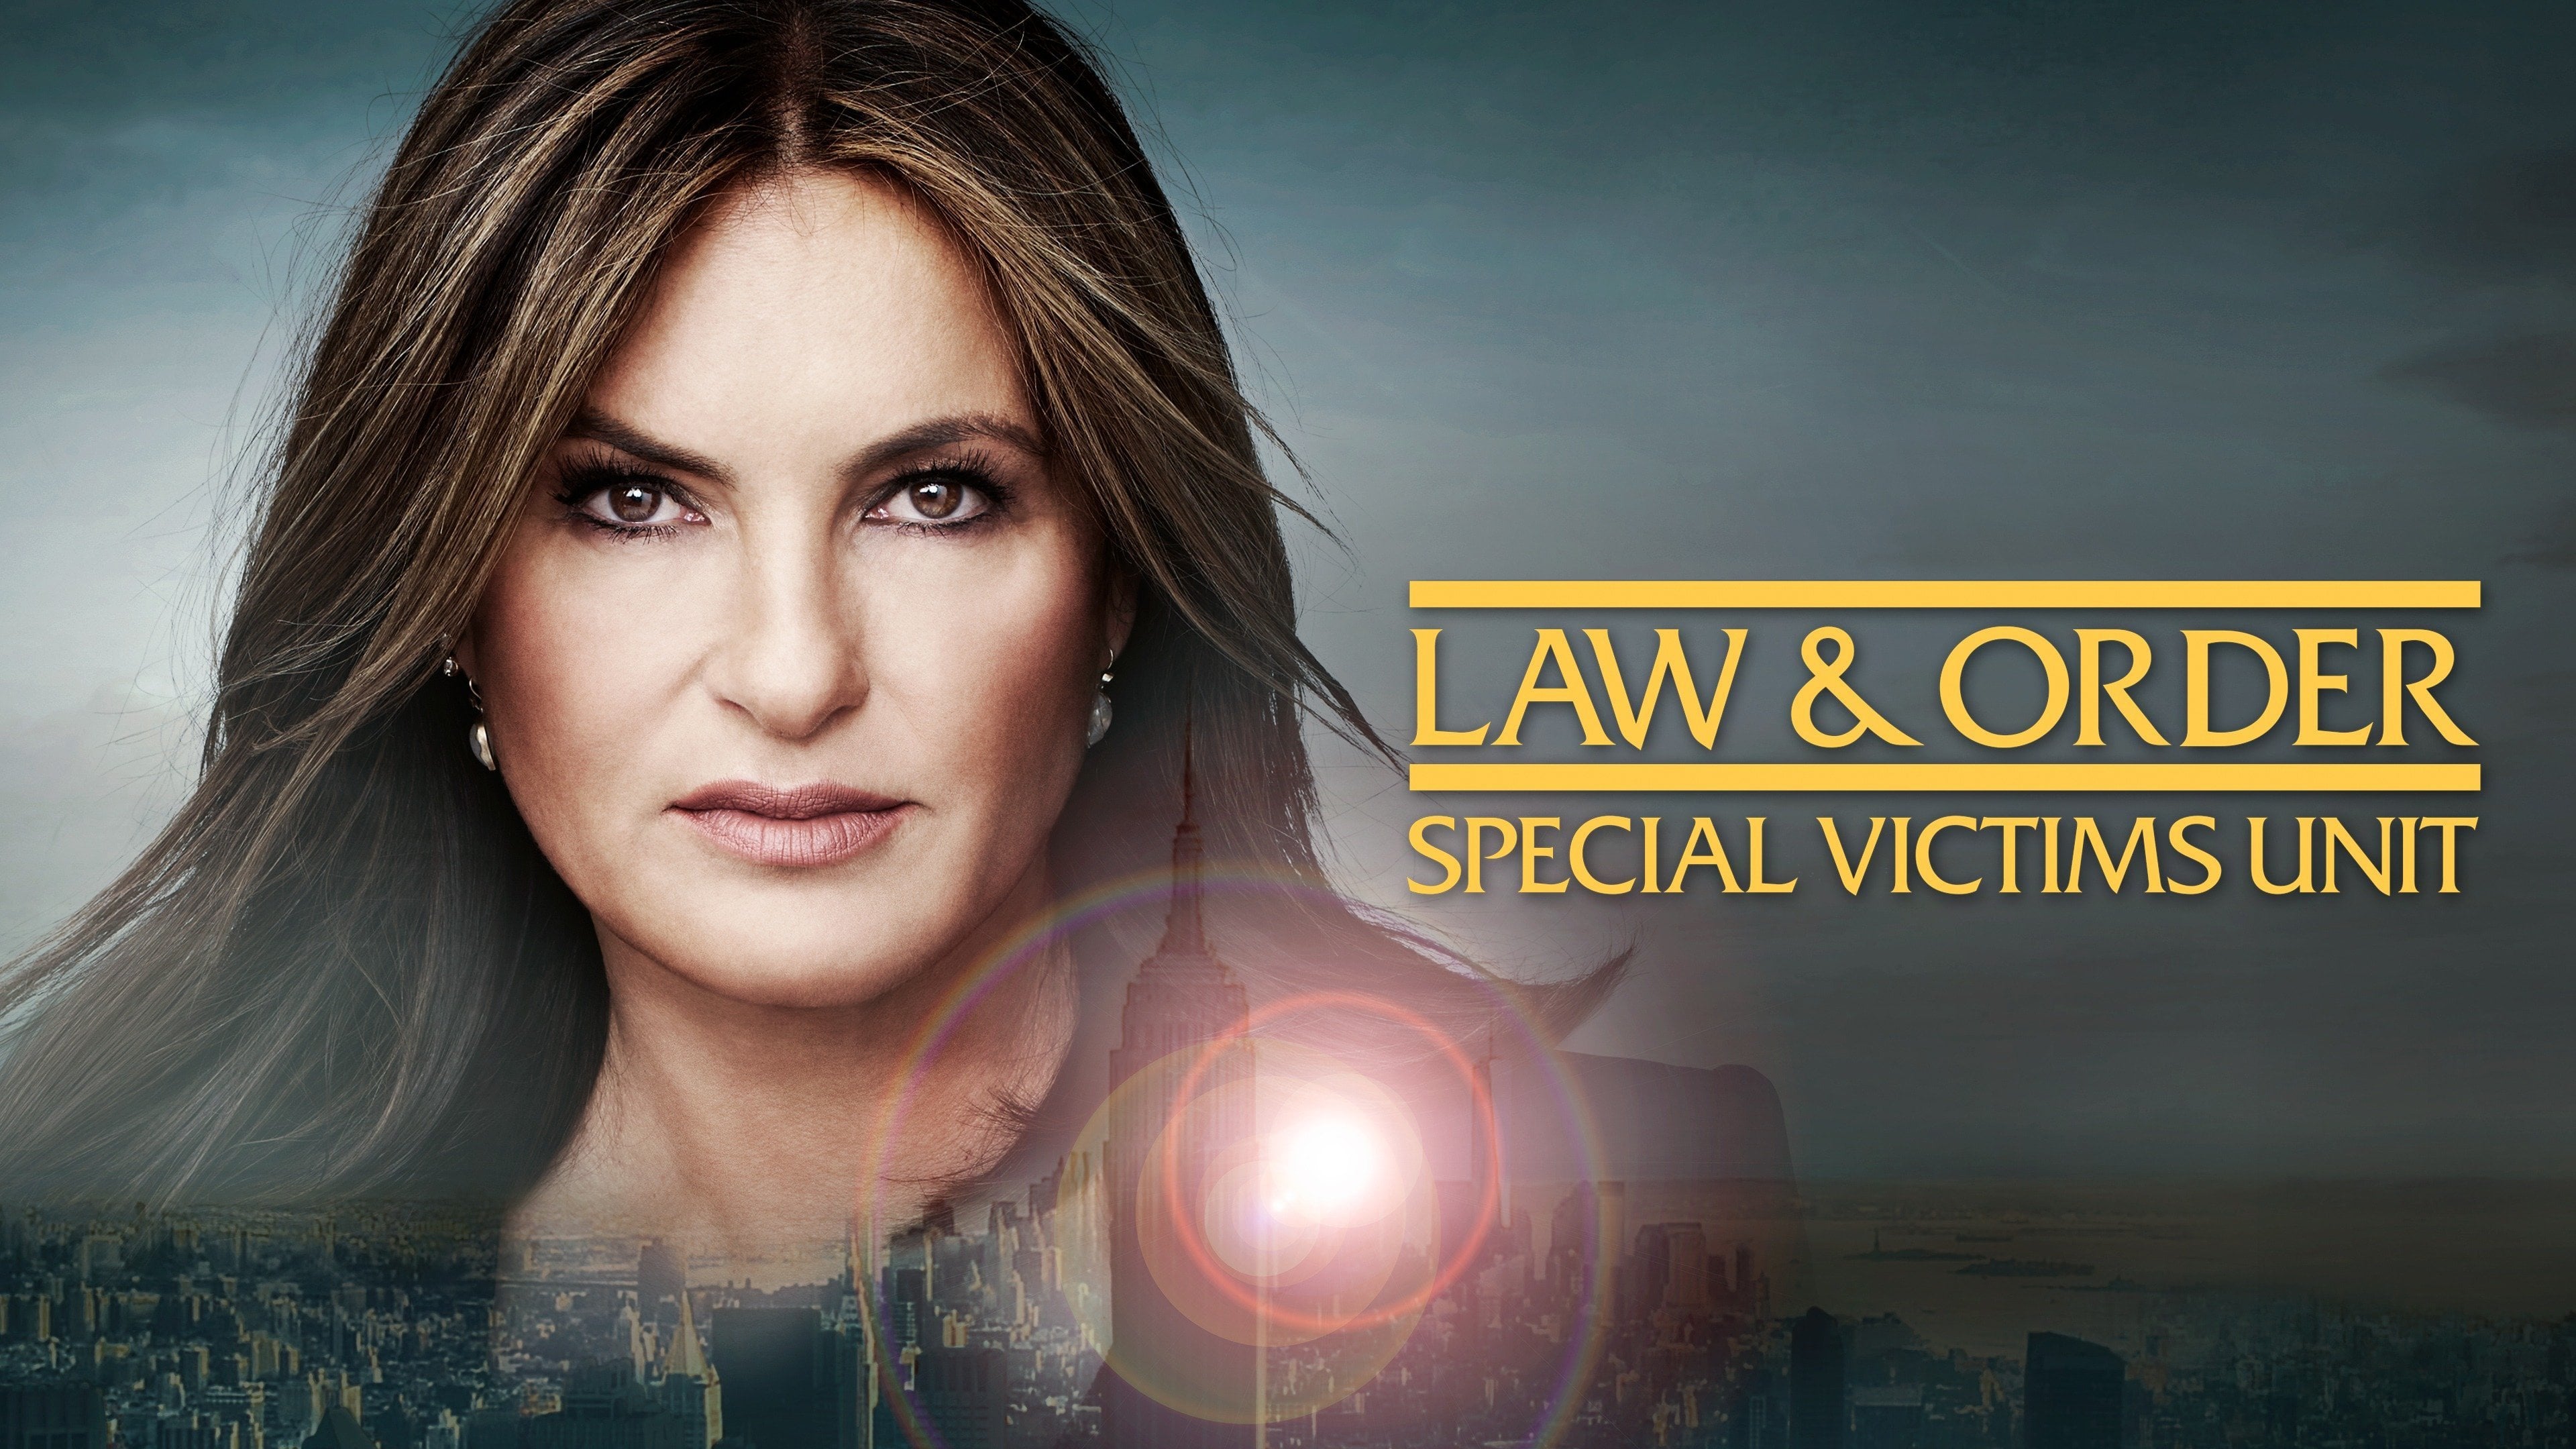 Law & Order: Special Victims Unit - Season 12